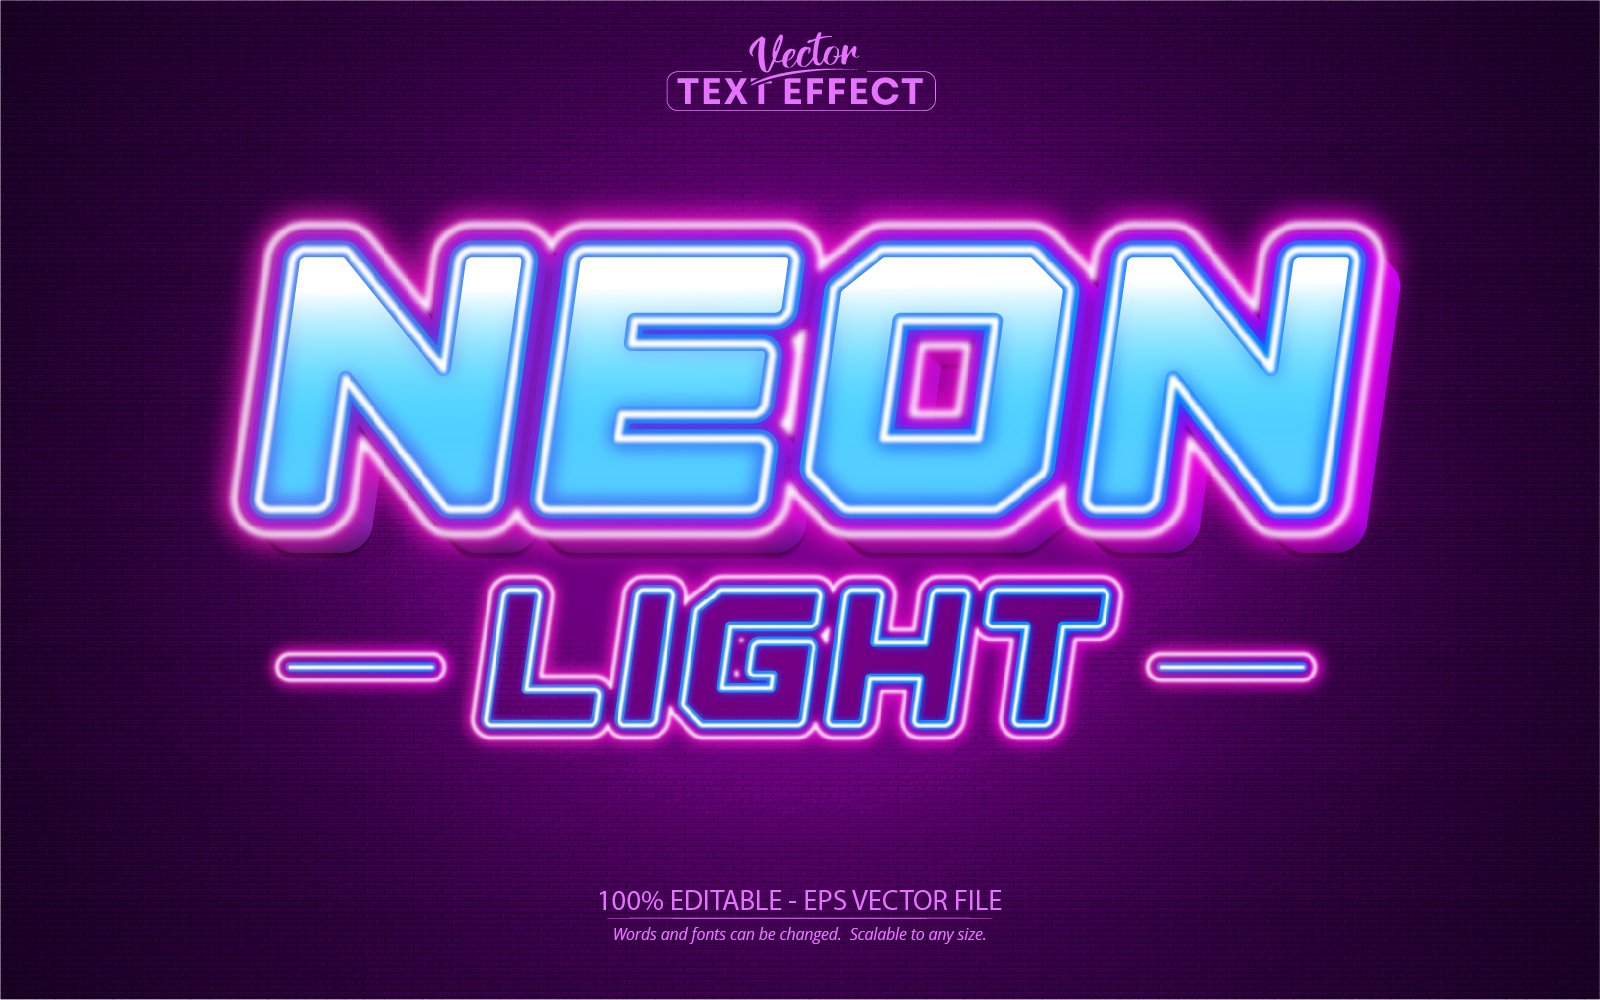 Neon Light - Editable Text Effect, Neon Light Text Style, Graphics Illustration